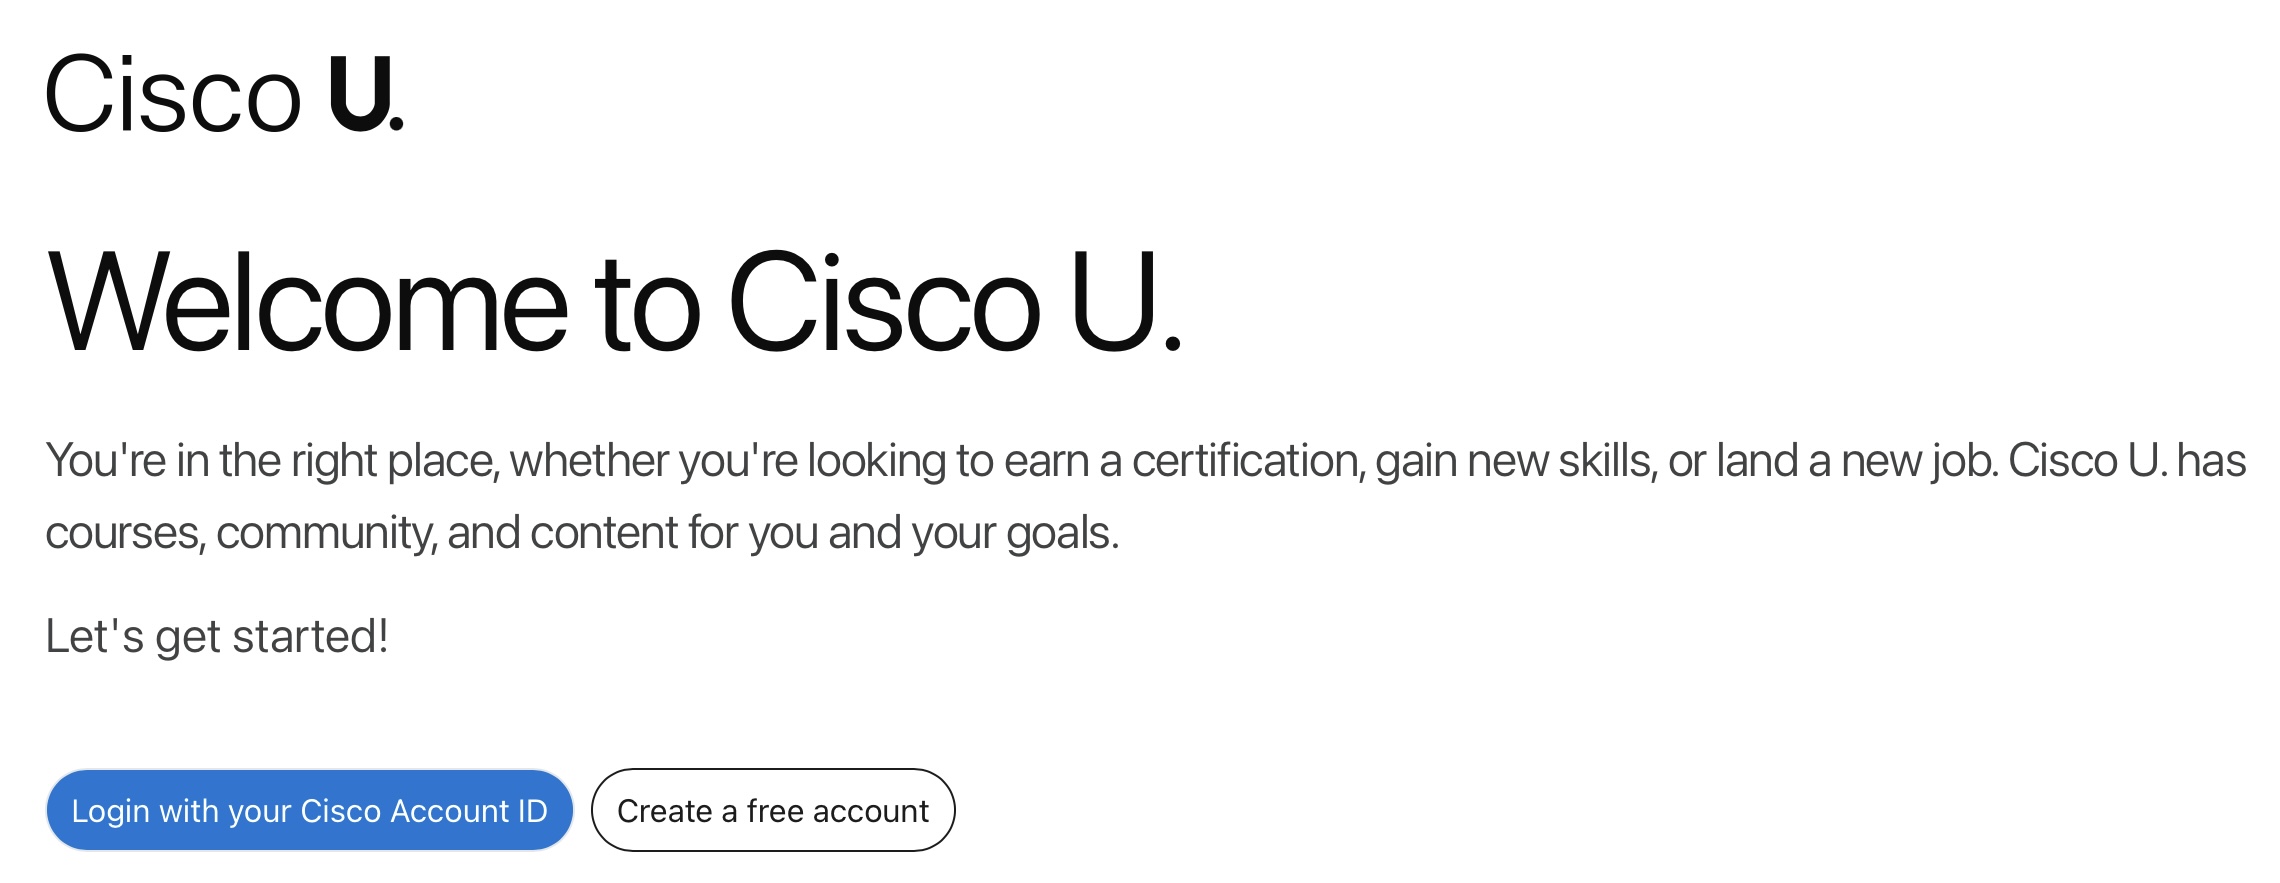 Cisco U. Welcome